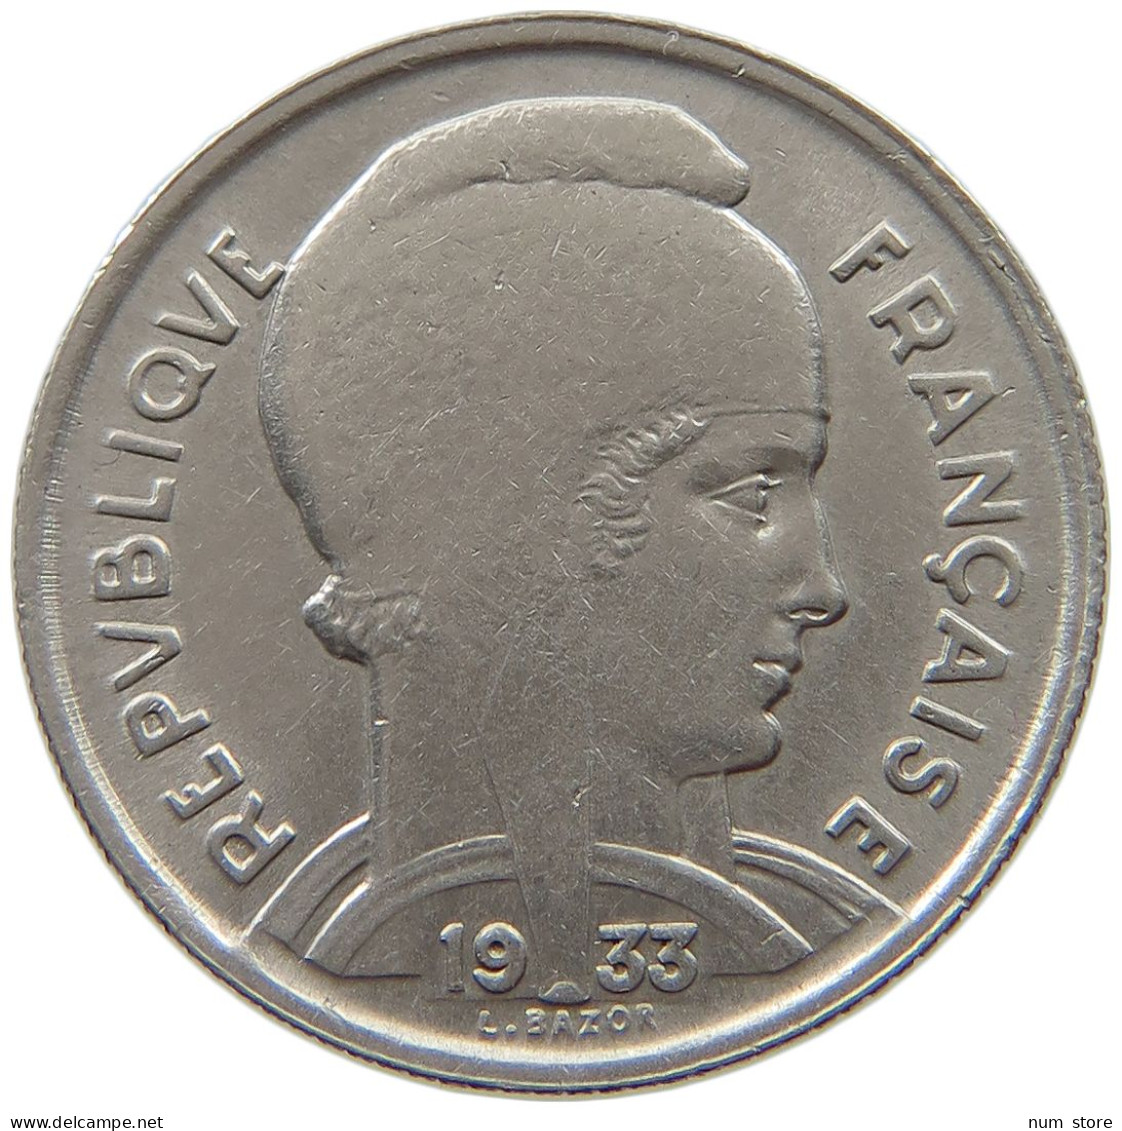 FRANCE 5 FRANCS 1933 #a015 0677 - 5 Francs